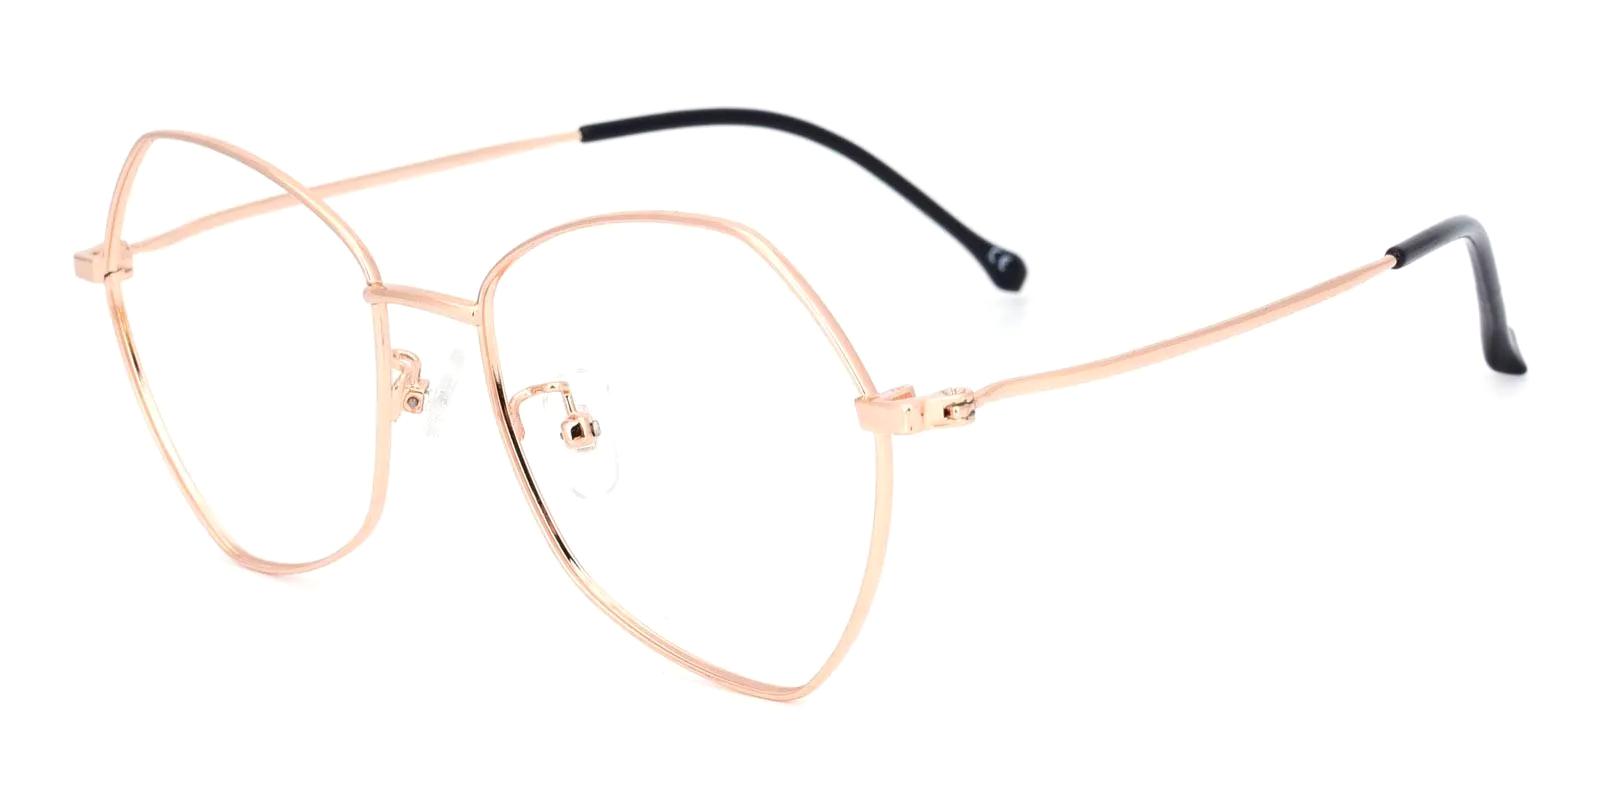 Thellet Rosegold Metal Eyeglasses , NosePads Frames from ABBE Glasses